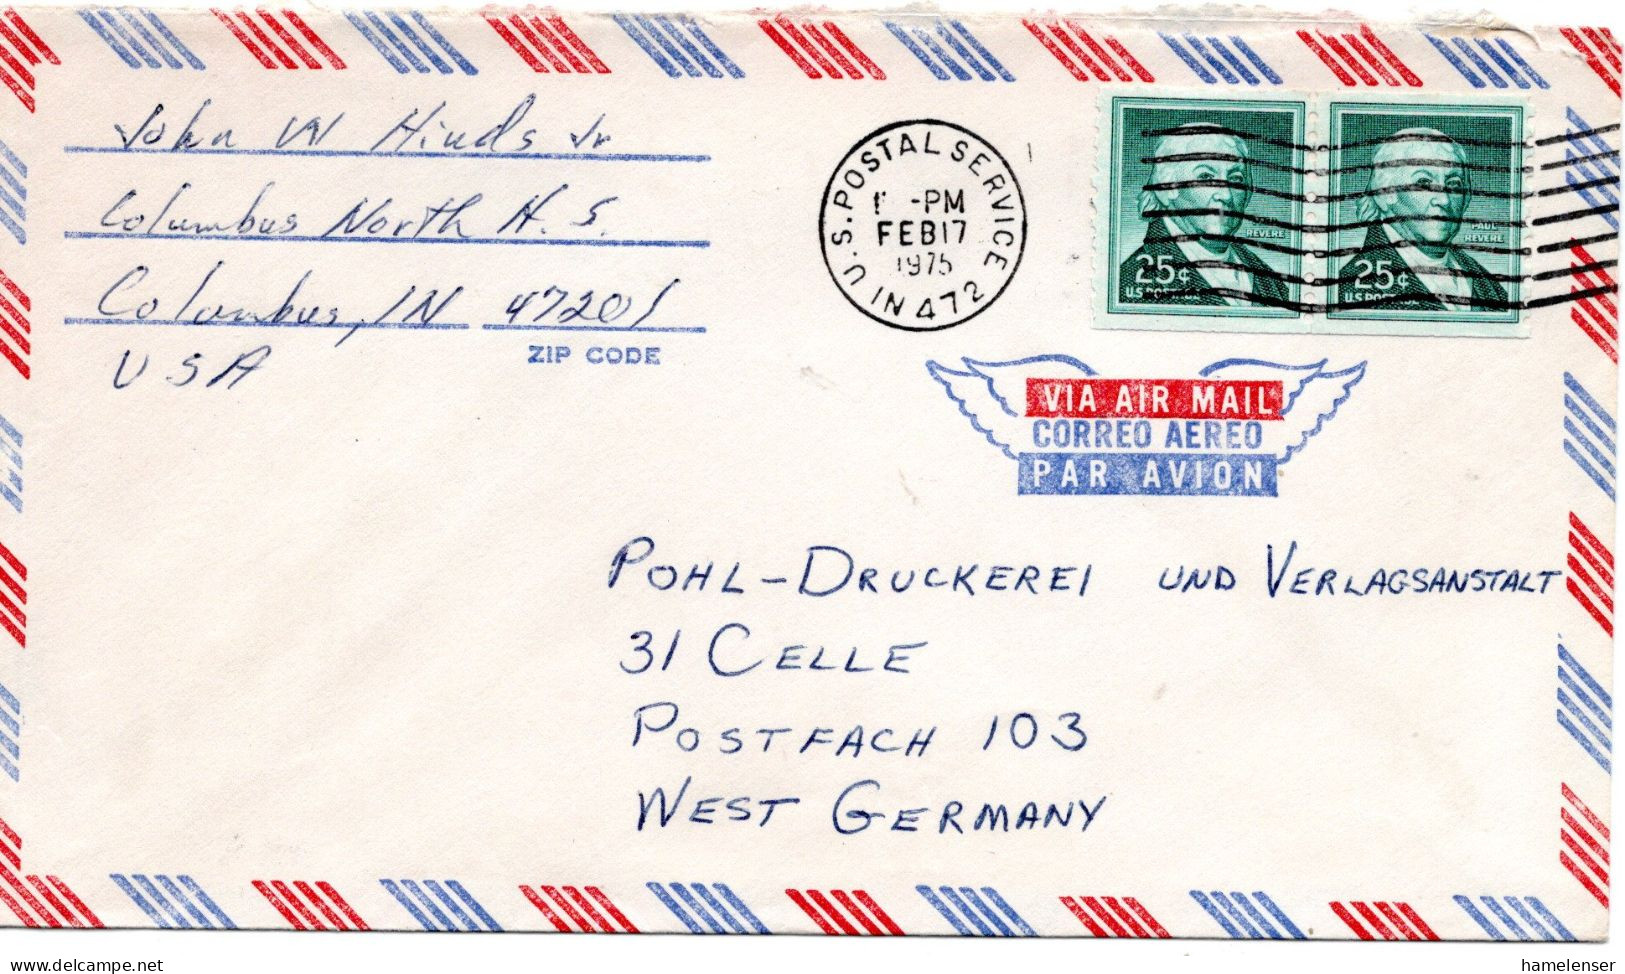 75199 - USA - 1975 - 2@25¢ Revere (Rolle) A LpBf U.S.POSTAL SERVICE IN 472 -> Westdeutschland - Brieven En Documenten